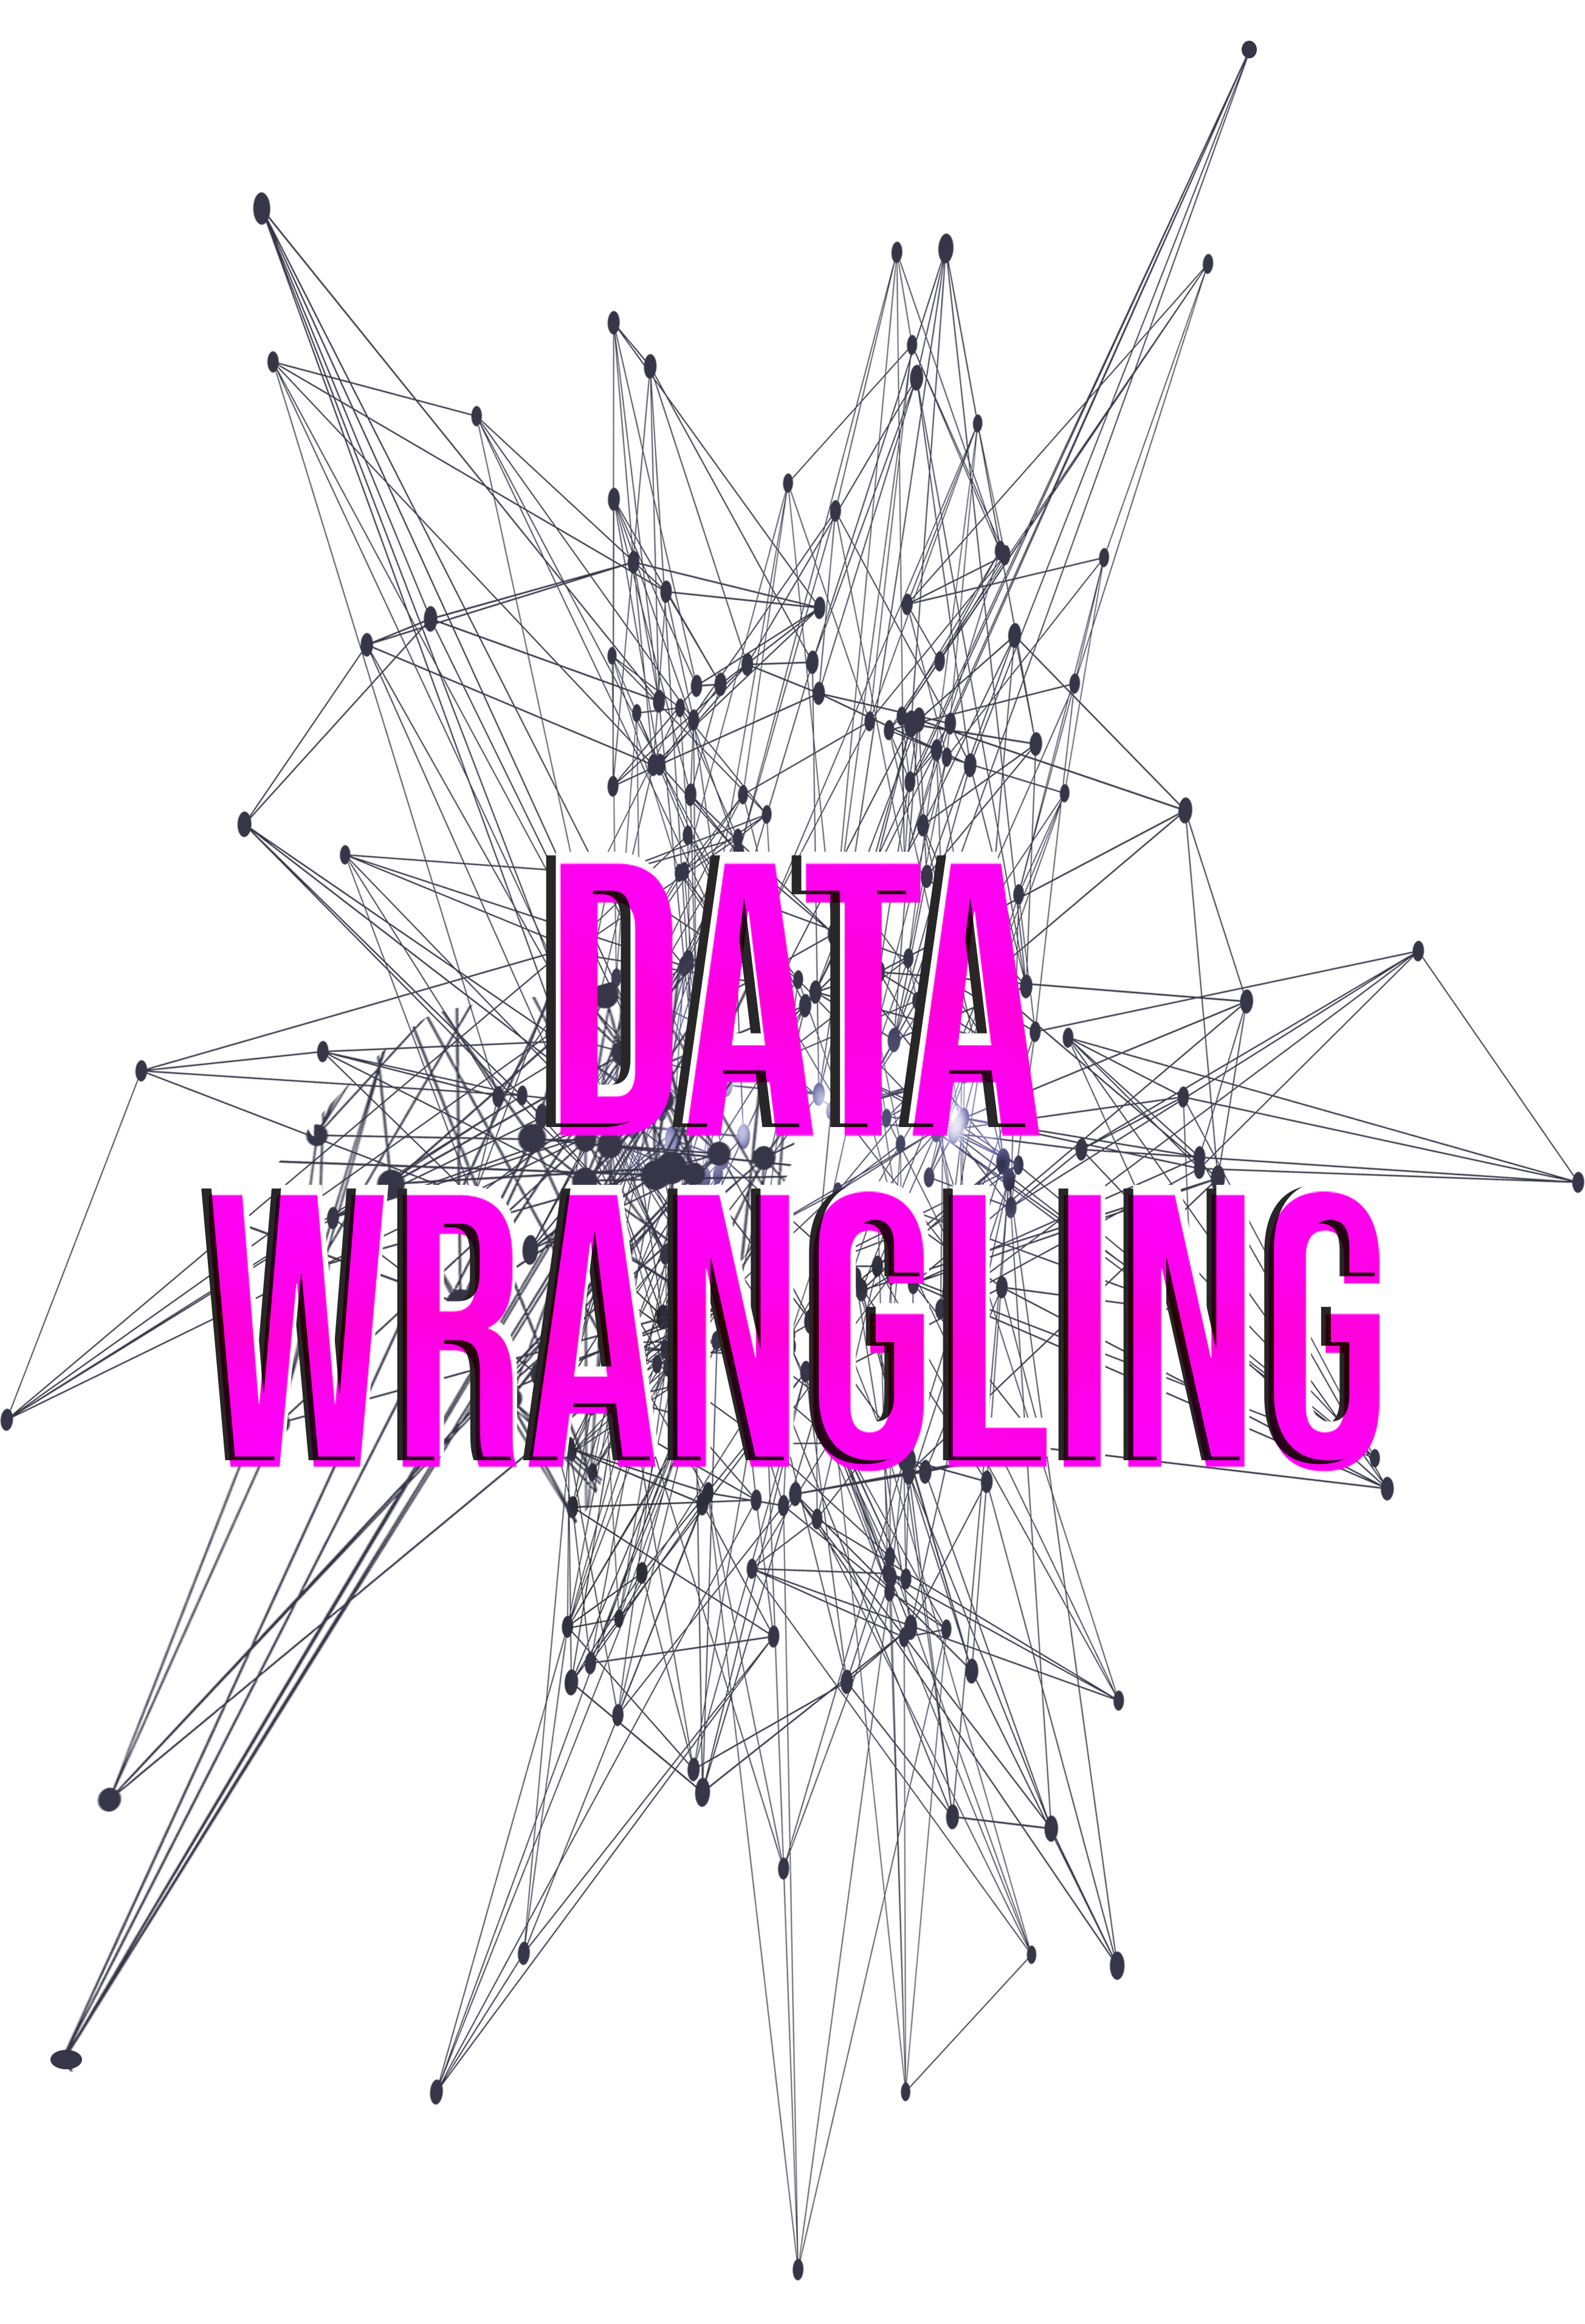 Data Wrangling